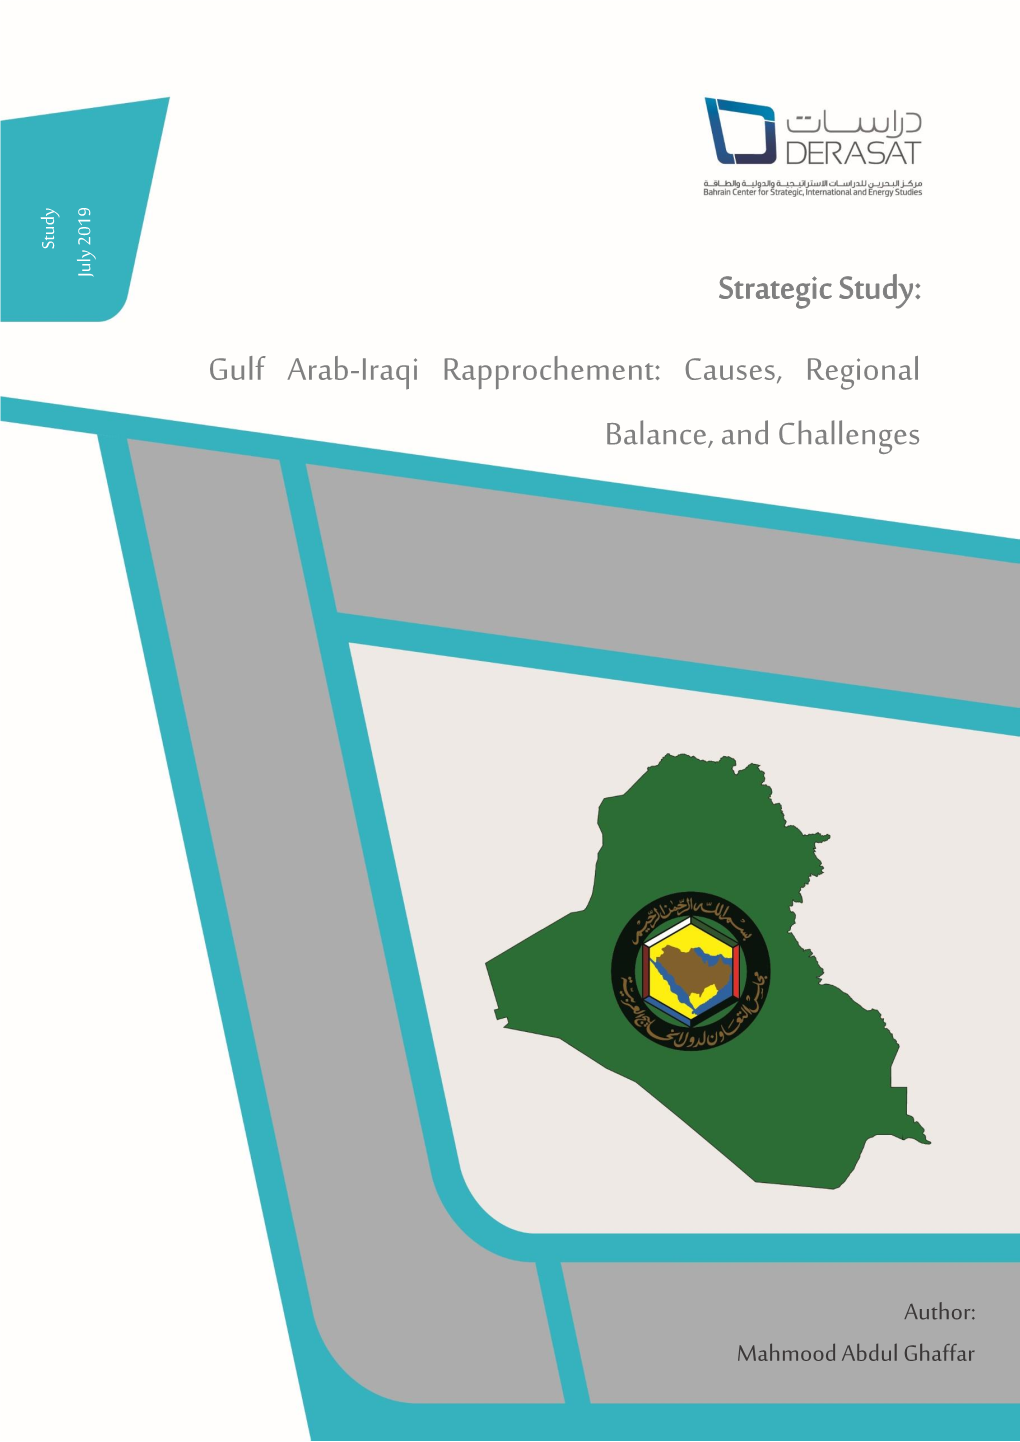 Strategic Study: Gulf Arab-Iraqi Rapprochement: Causes, Regional Balance, and Challenges